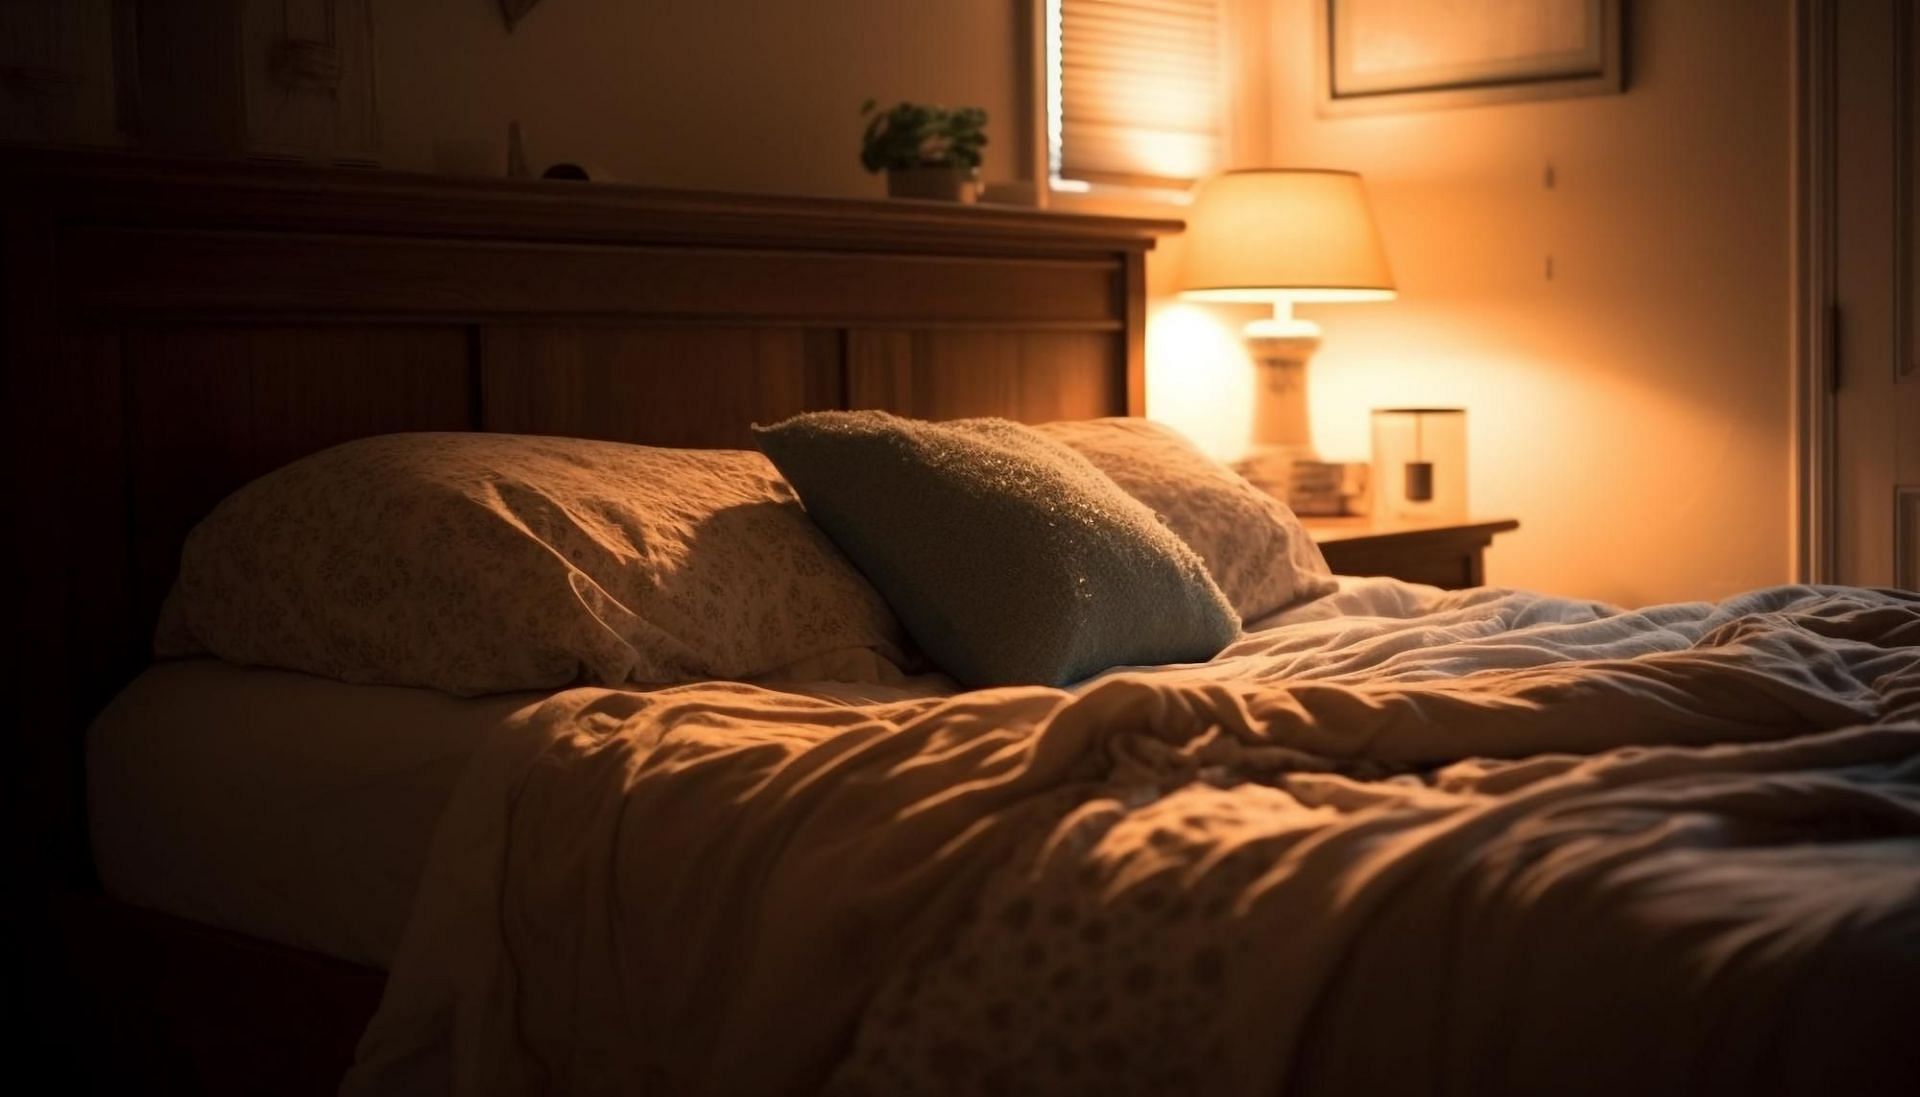 A warm and cozy bed awaits you. (Image via Freepik/ vecstock)